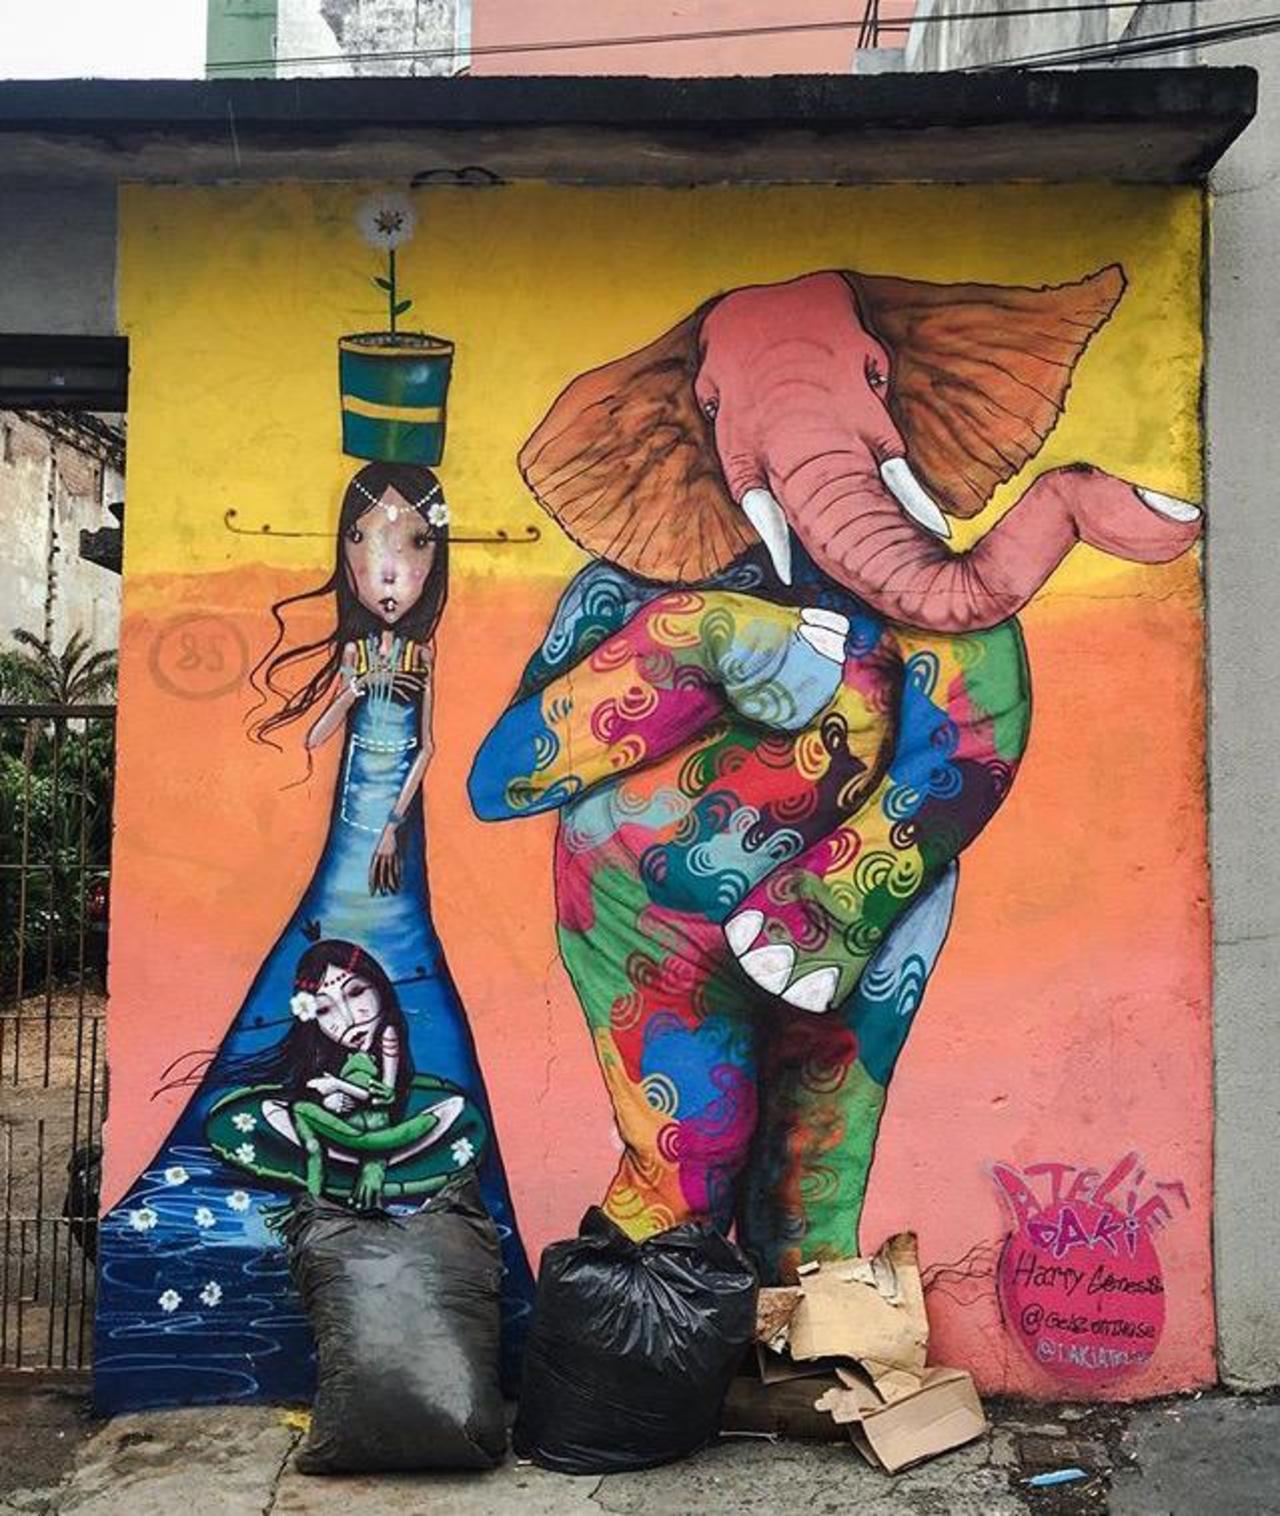 Street Art by Harry Geneis & Gelson in São Paulo 

#art #mural #graffiti #streetart http://t.co/GKkFYRyuGk